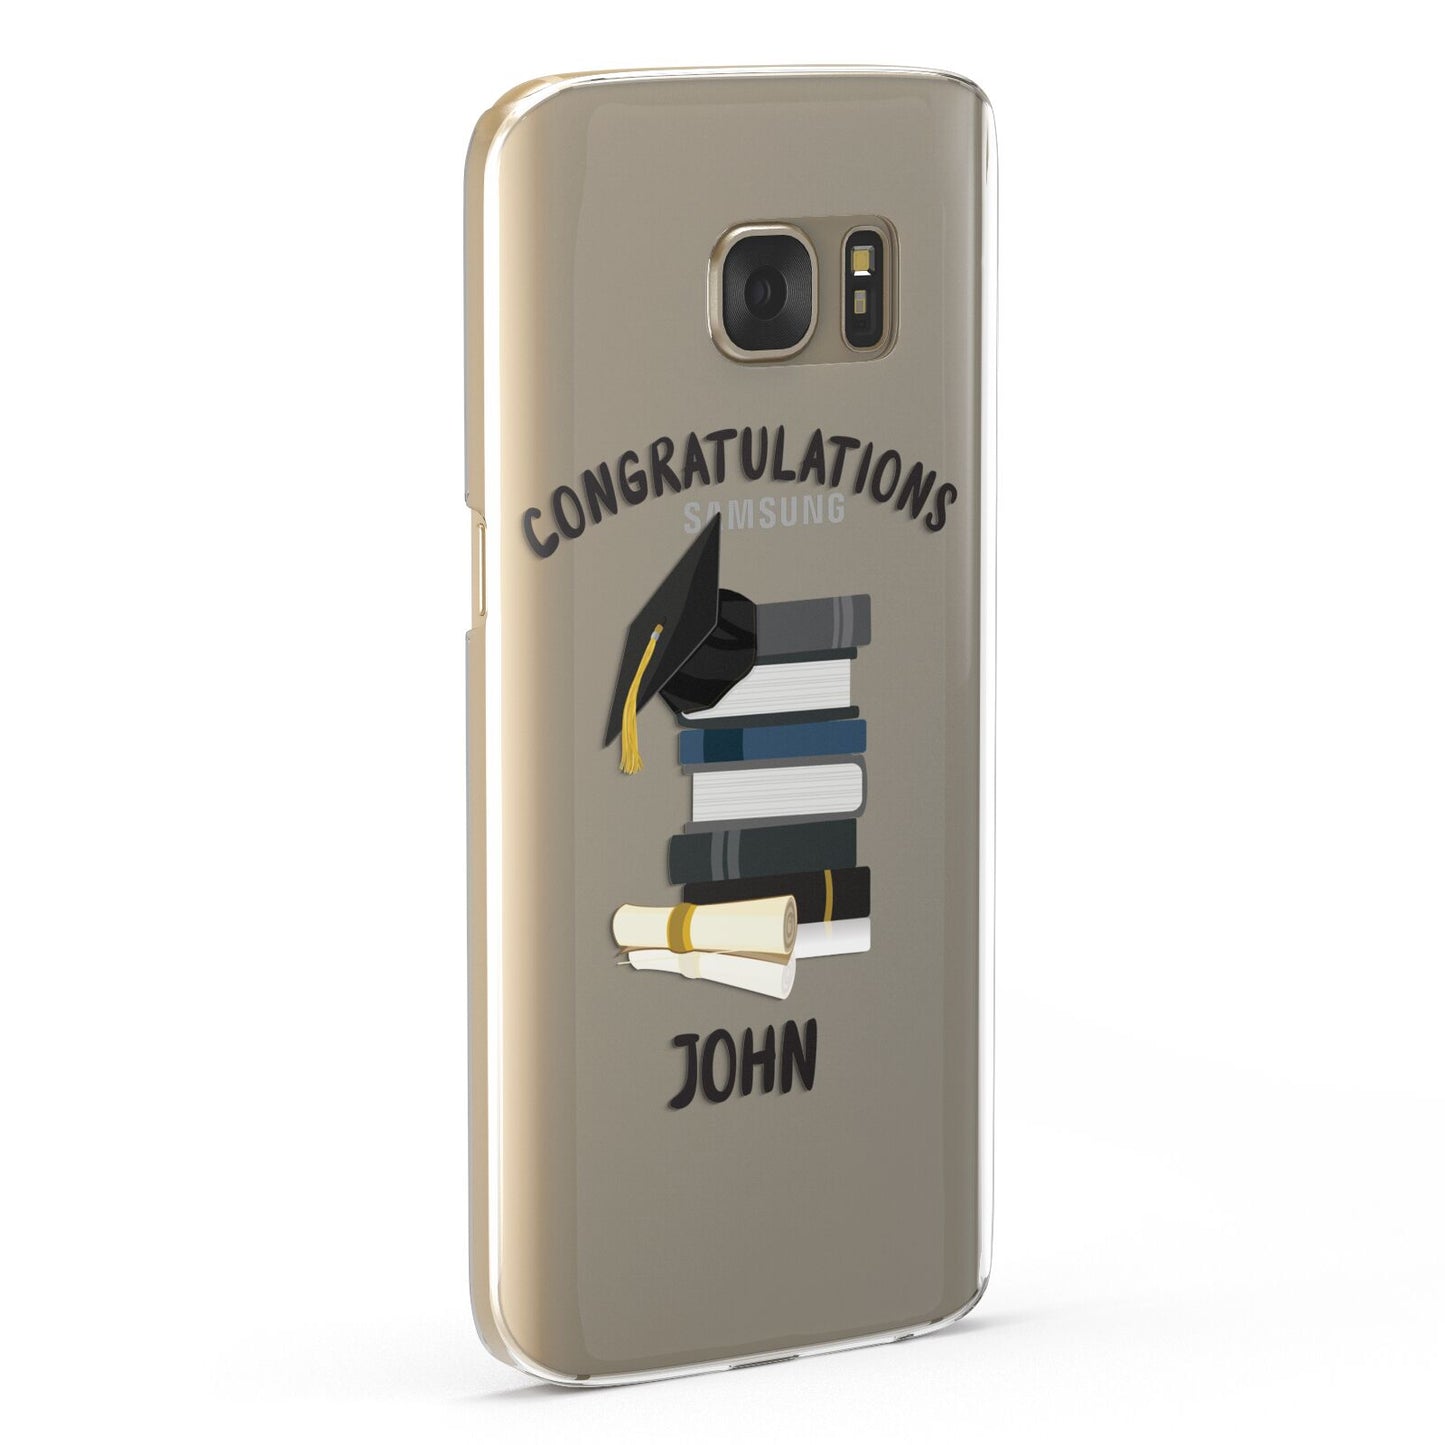 Congratulations Graduate Samsung Galaxy Case Fourty Five Degrees